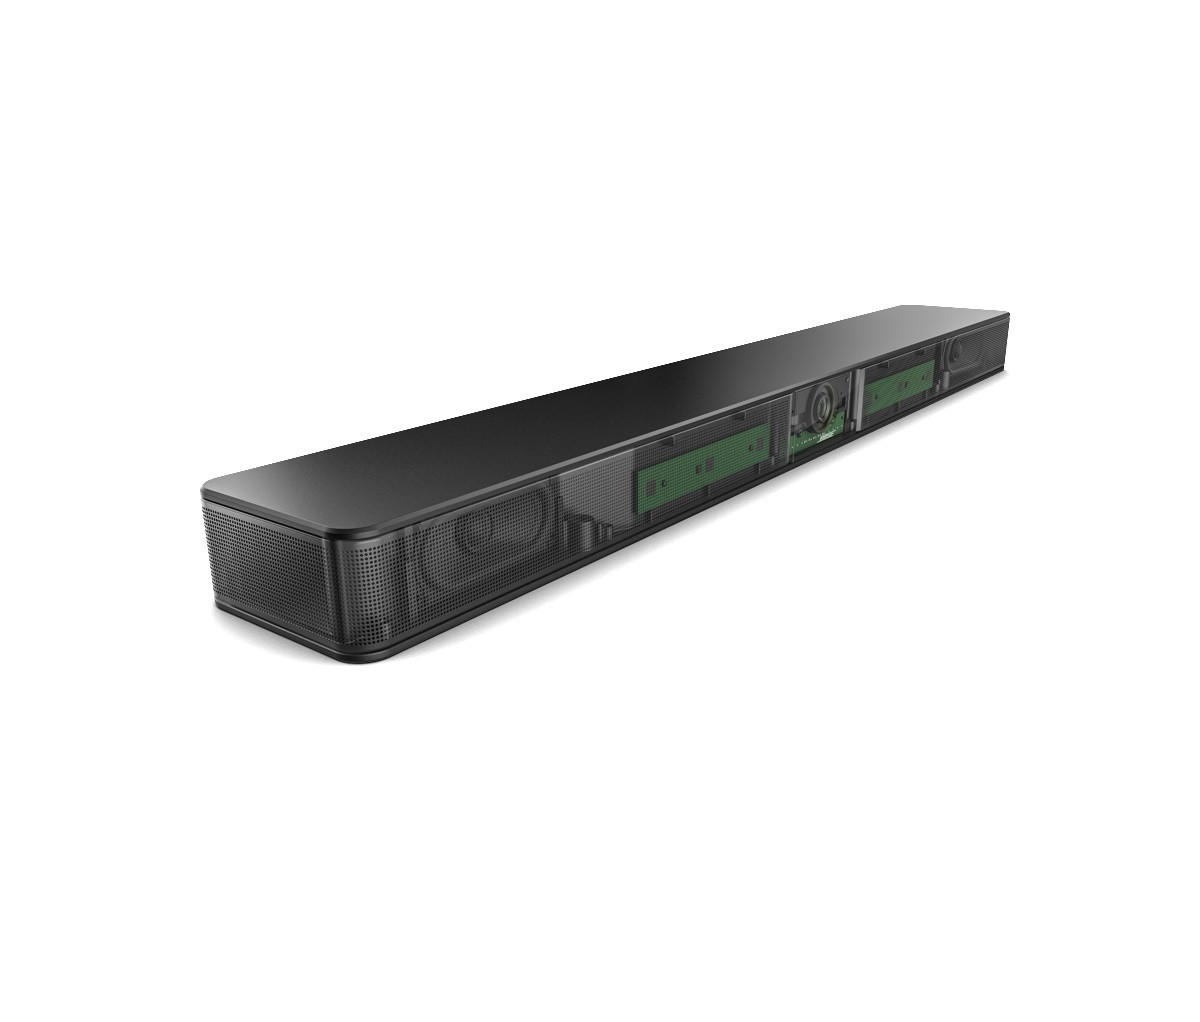 Bose-Videobar-VB1-All-in-One-USB-conferentiesysteem-8MP-USB-C-5x-zoom-123-FoV-UHD-2160p-Demo